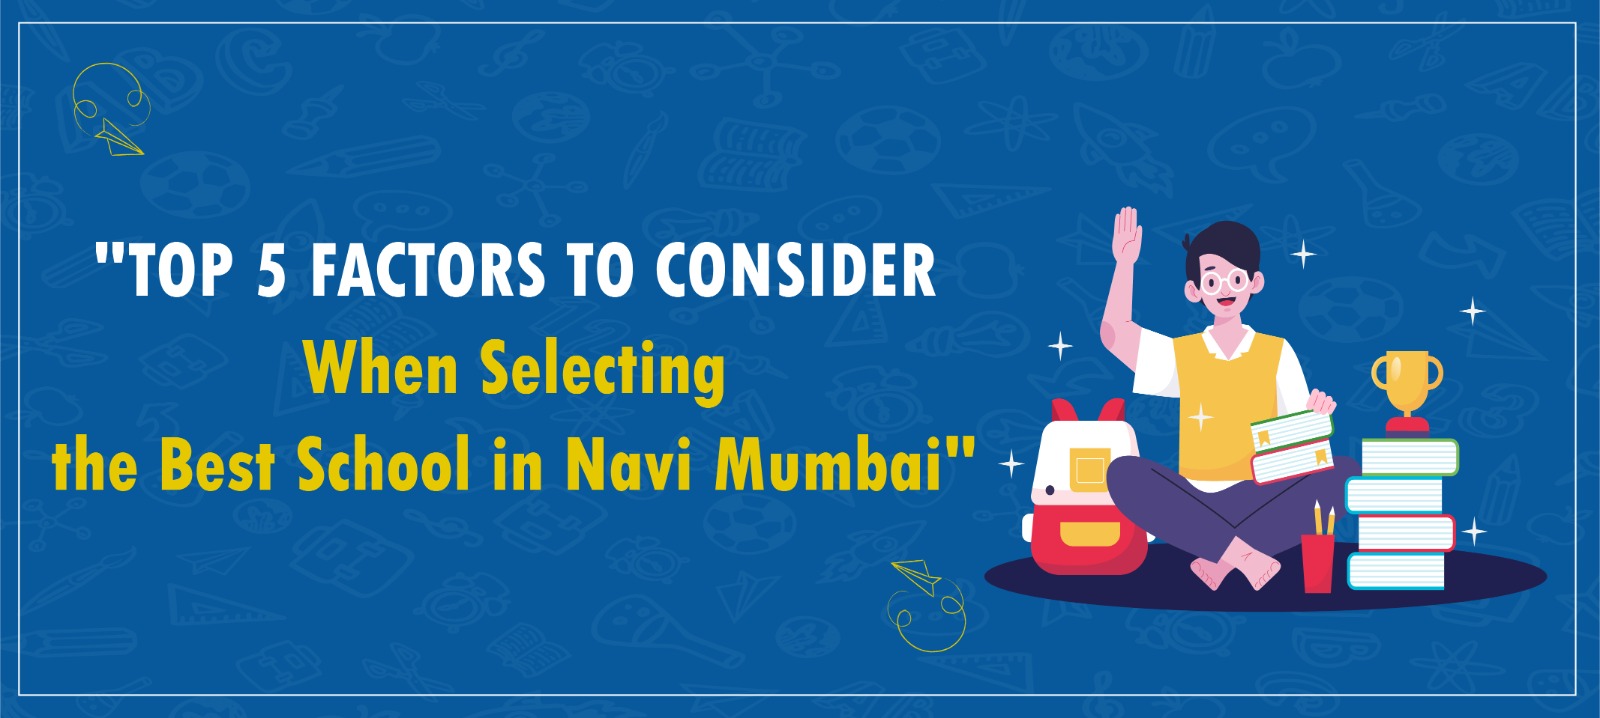 Top 5 Factors to Consider When Selecting the Best School in Navi Mumbai